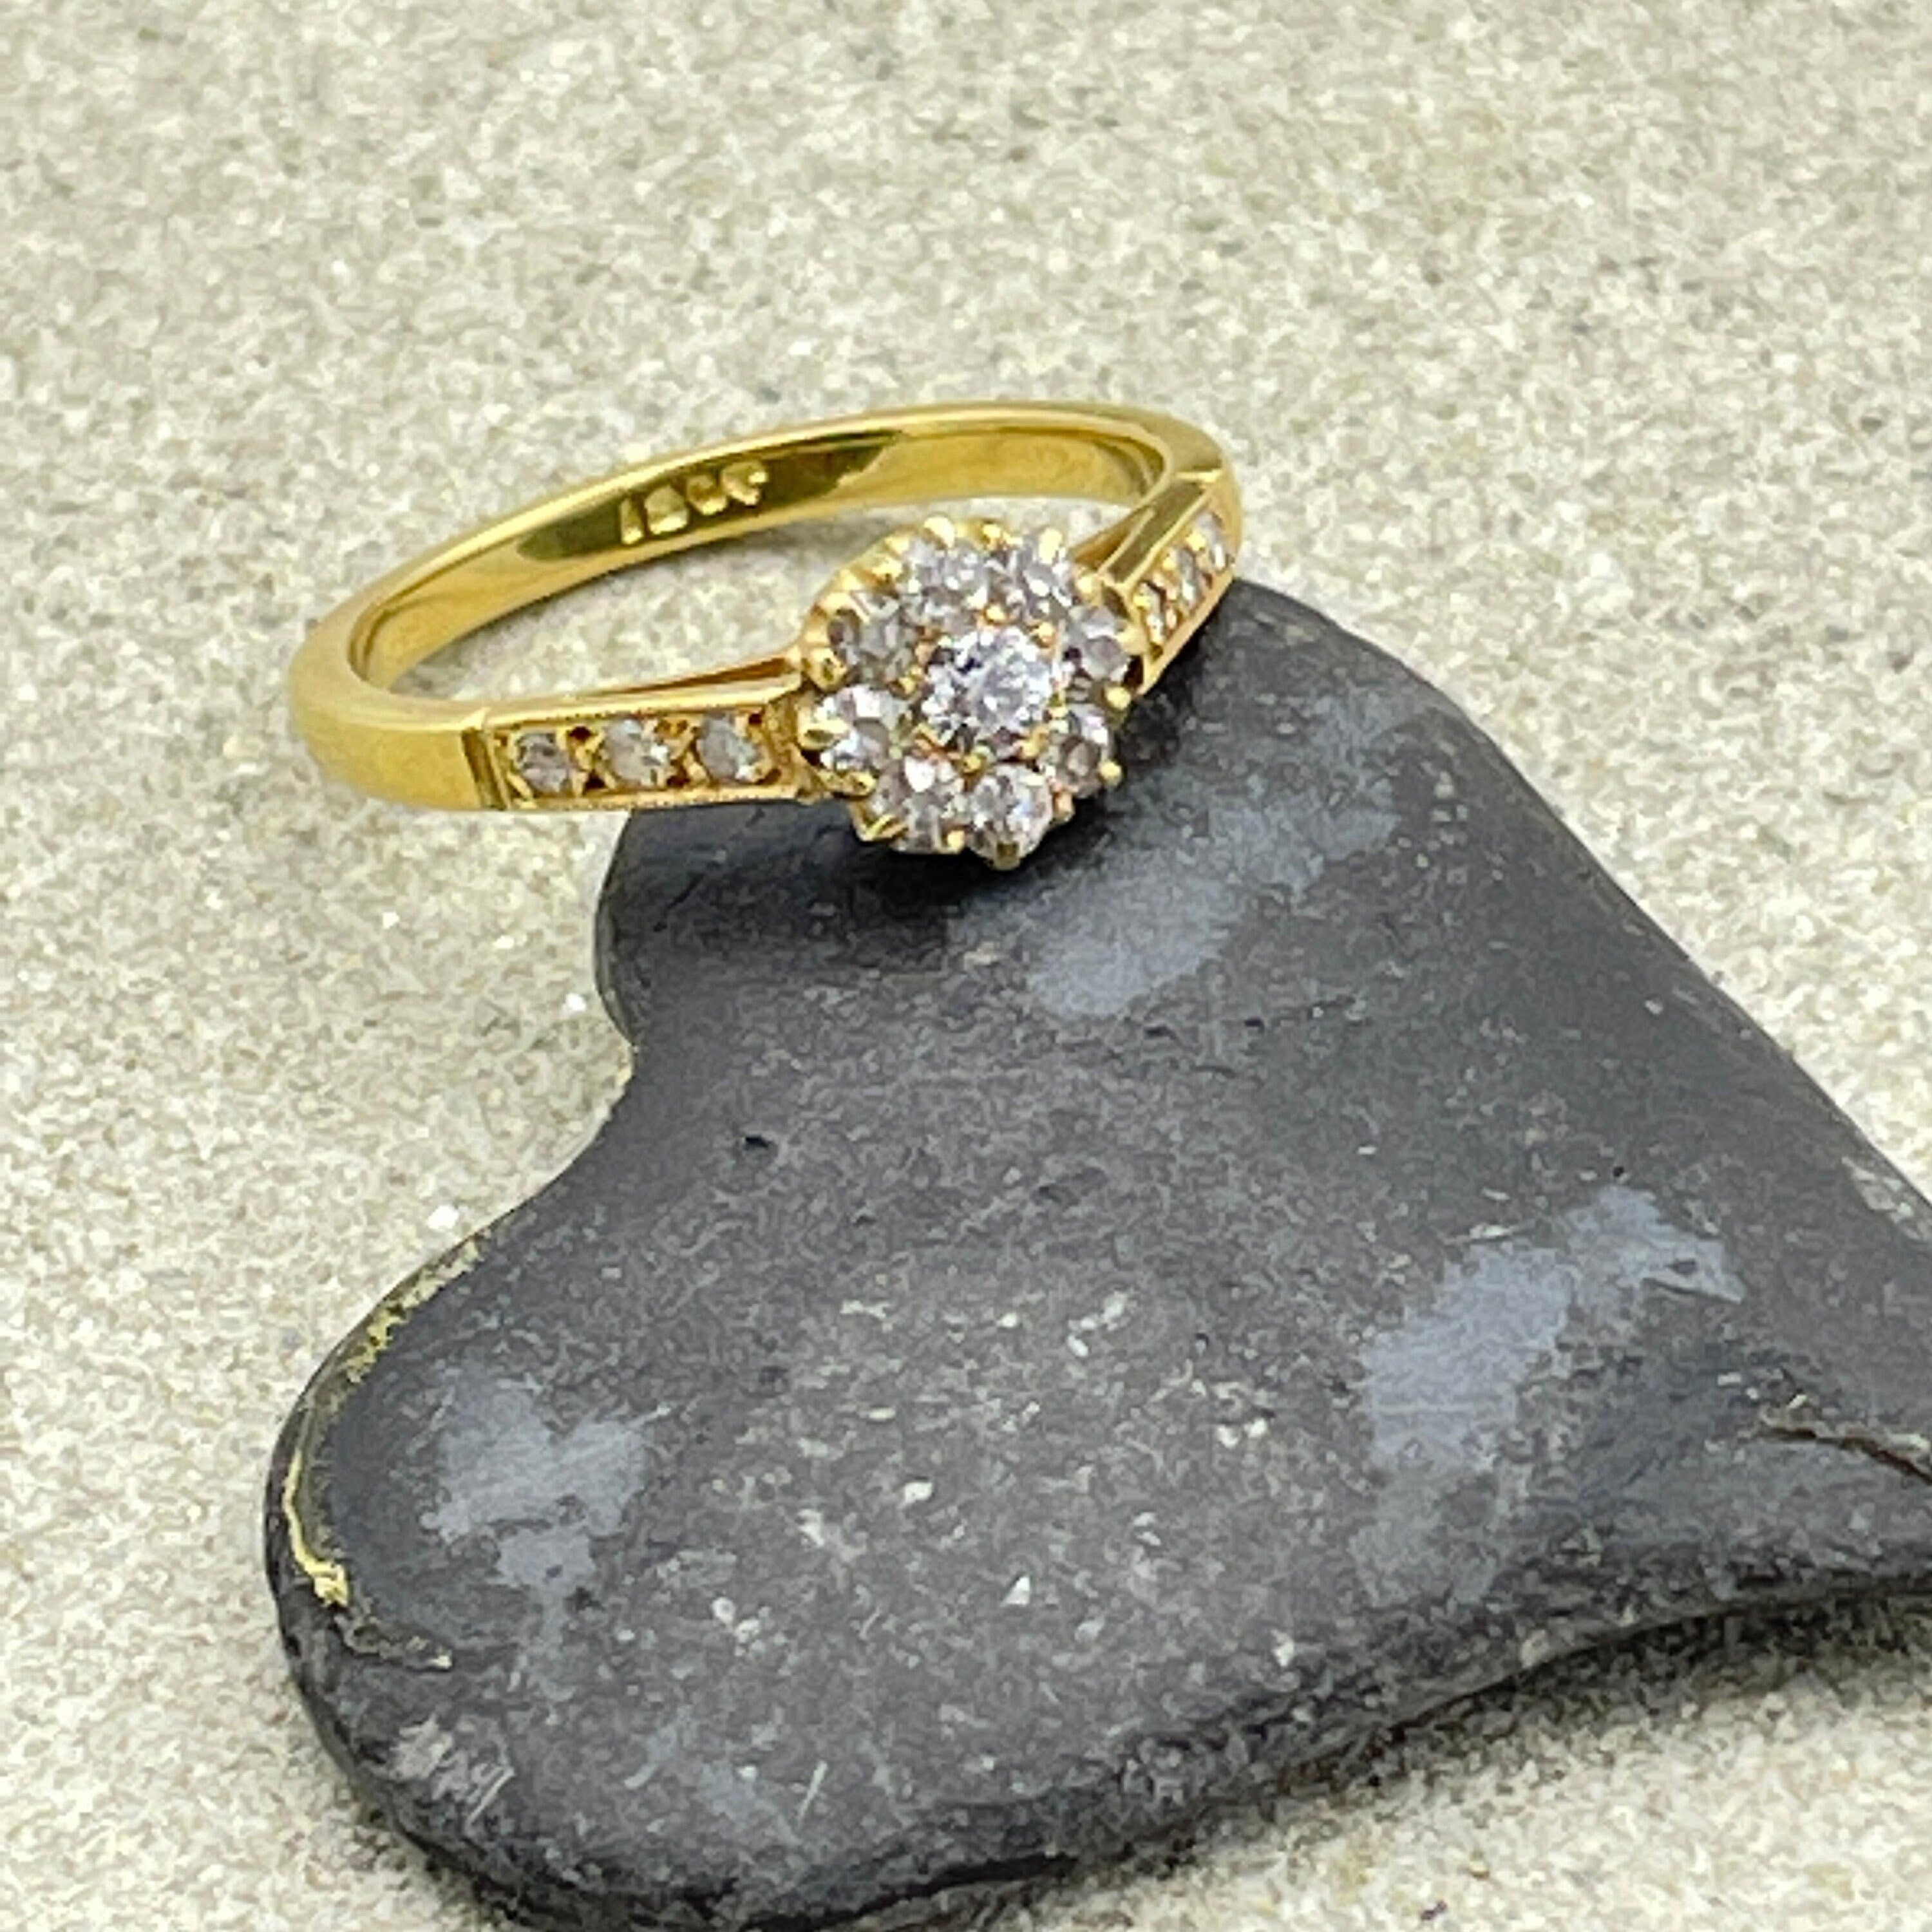 Antique 18ct gold old cut diamond cluster ring, diamond shoulders, c1910